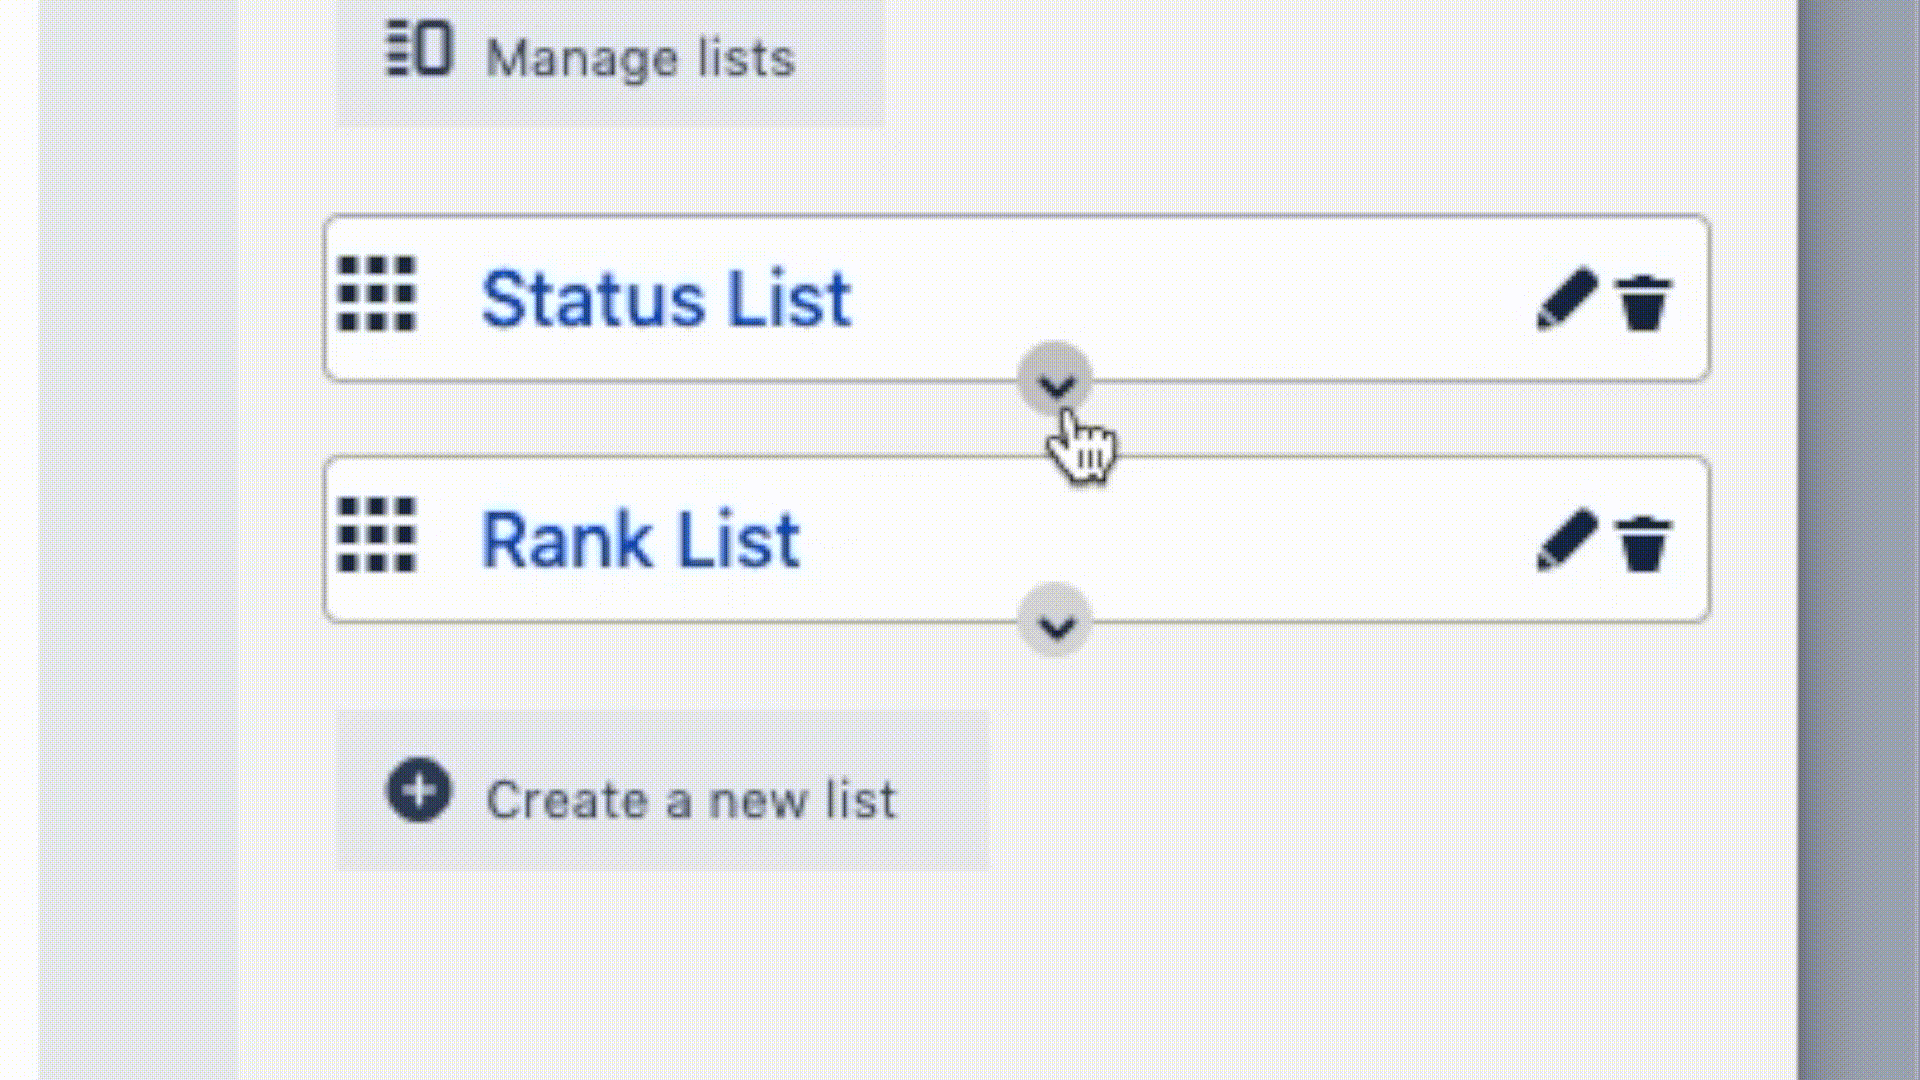 Manage lists options